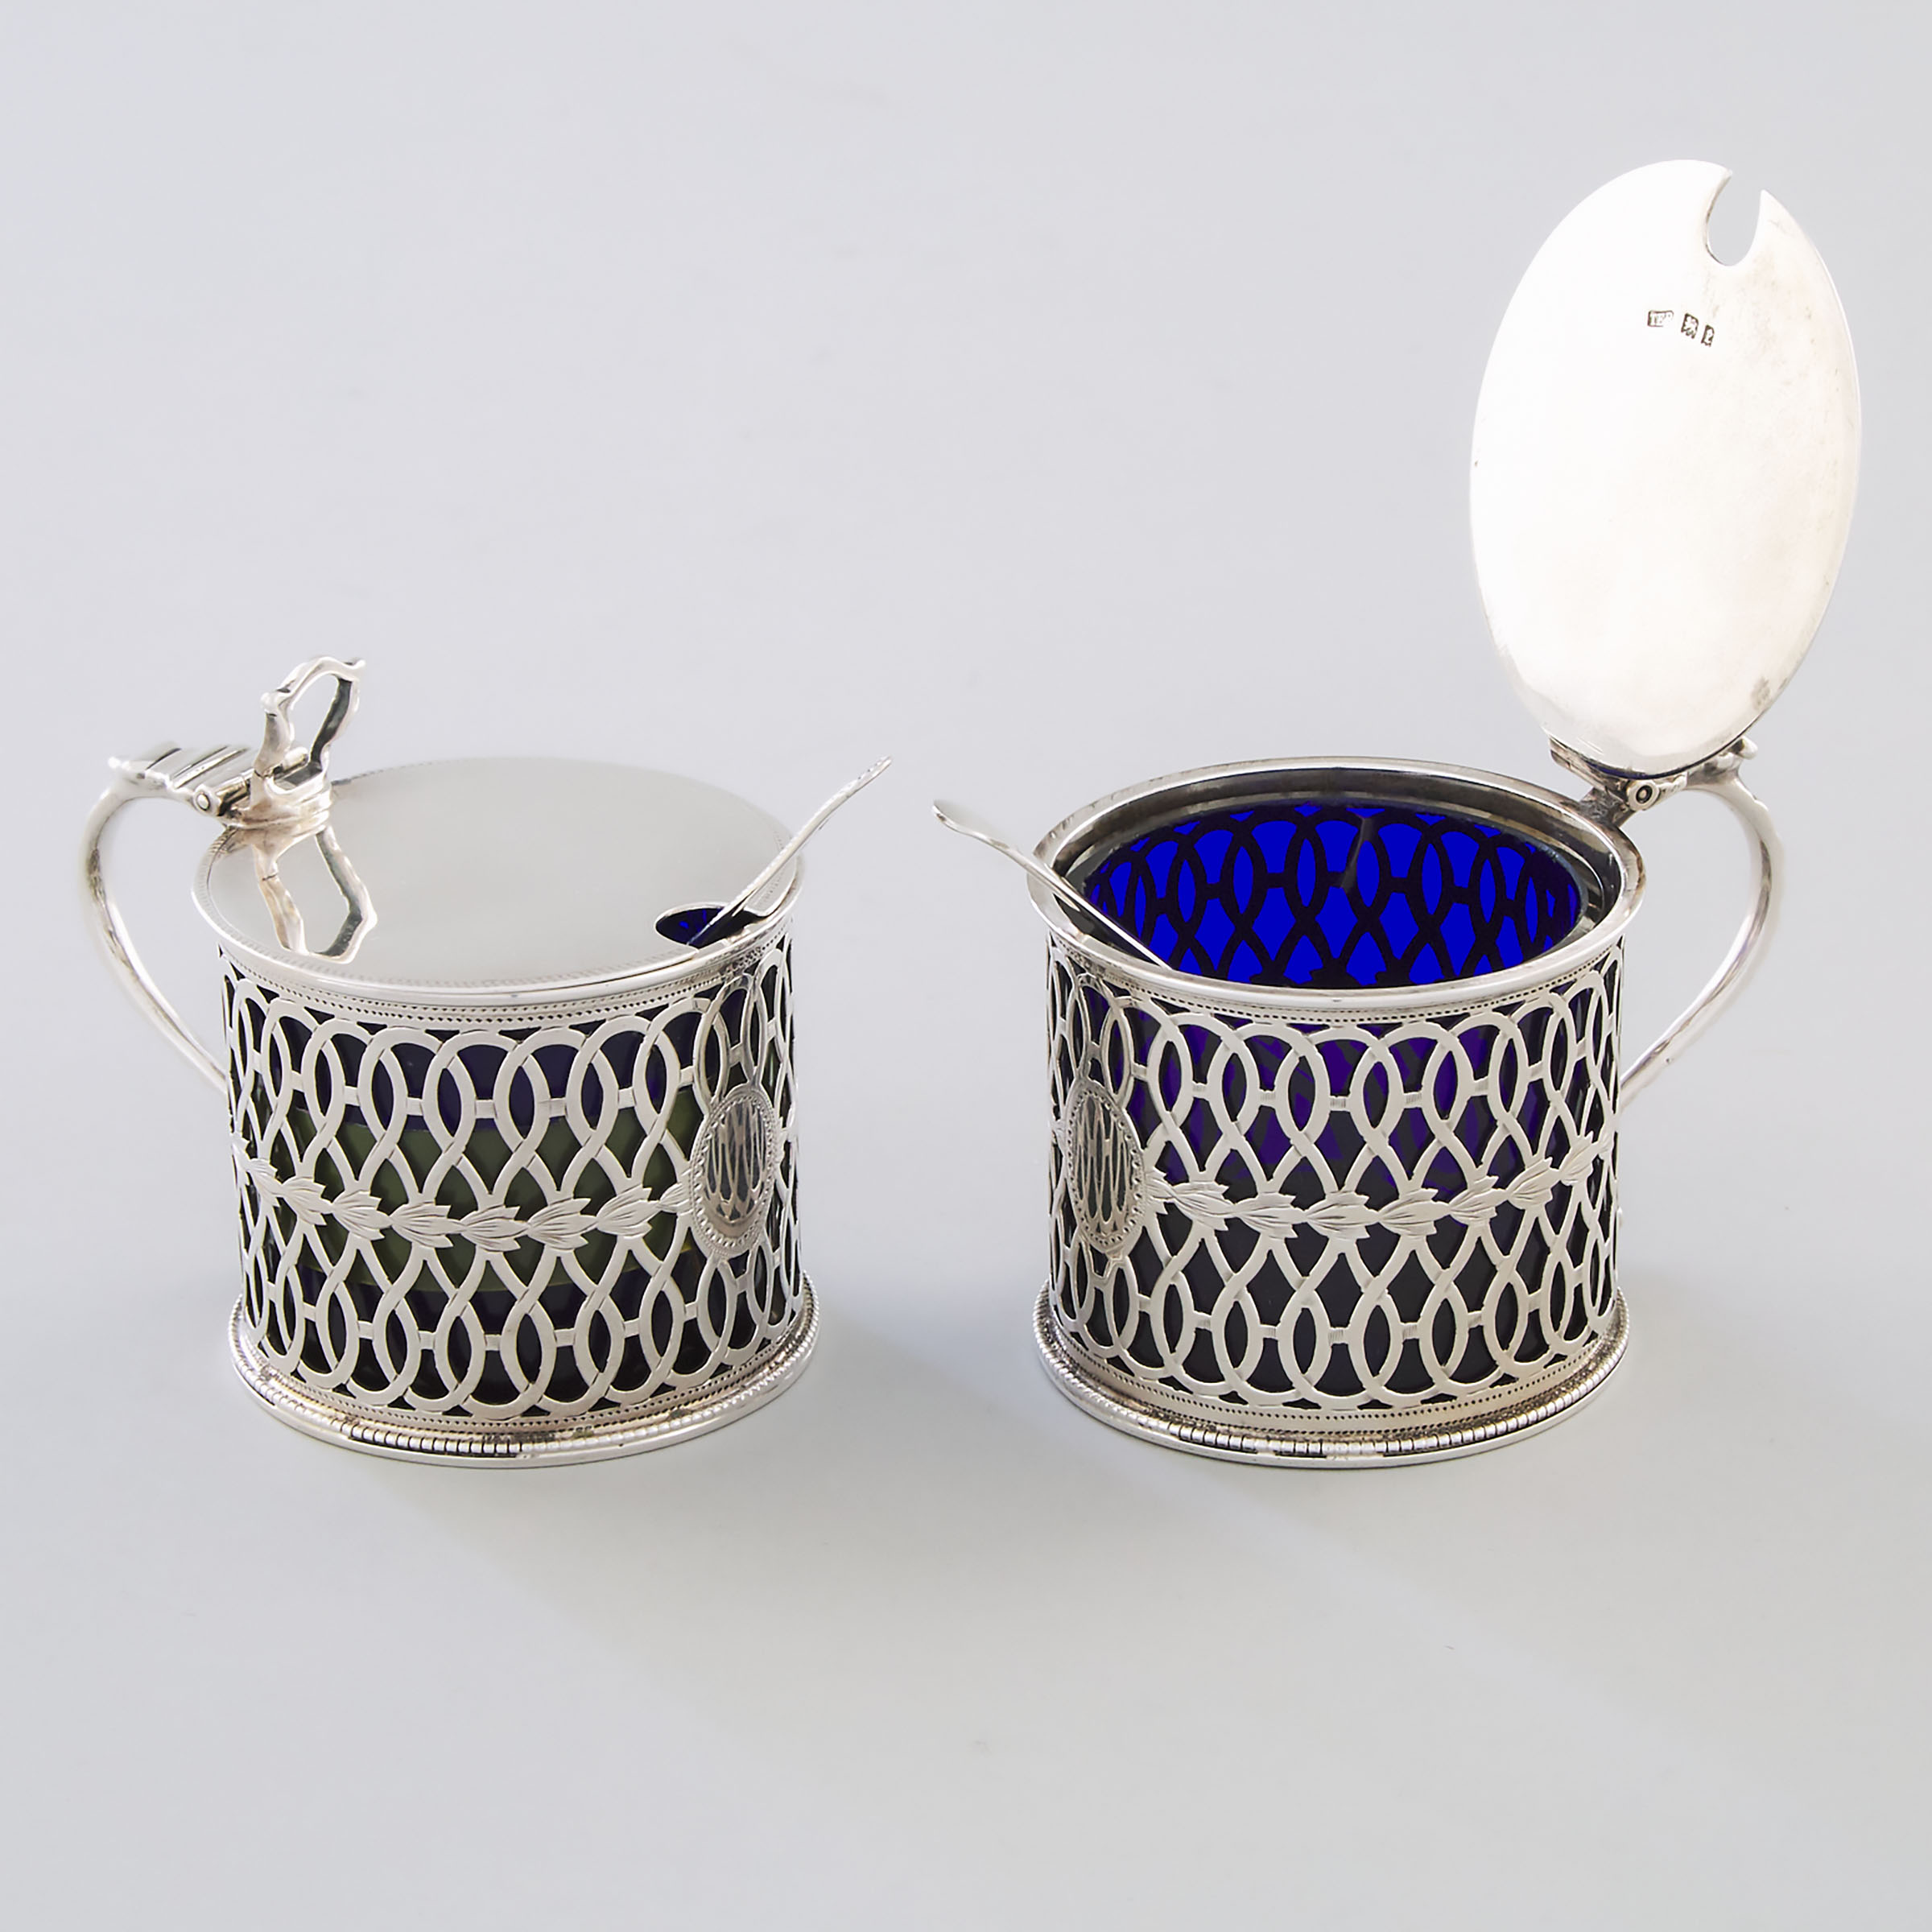 Pair of English Silver Pierced Drum Mustard Pots, Thomas Edward Rawlings (possibly), London, 1920